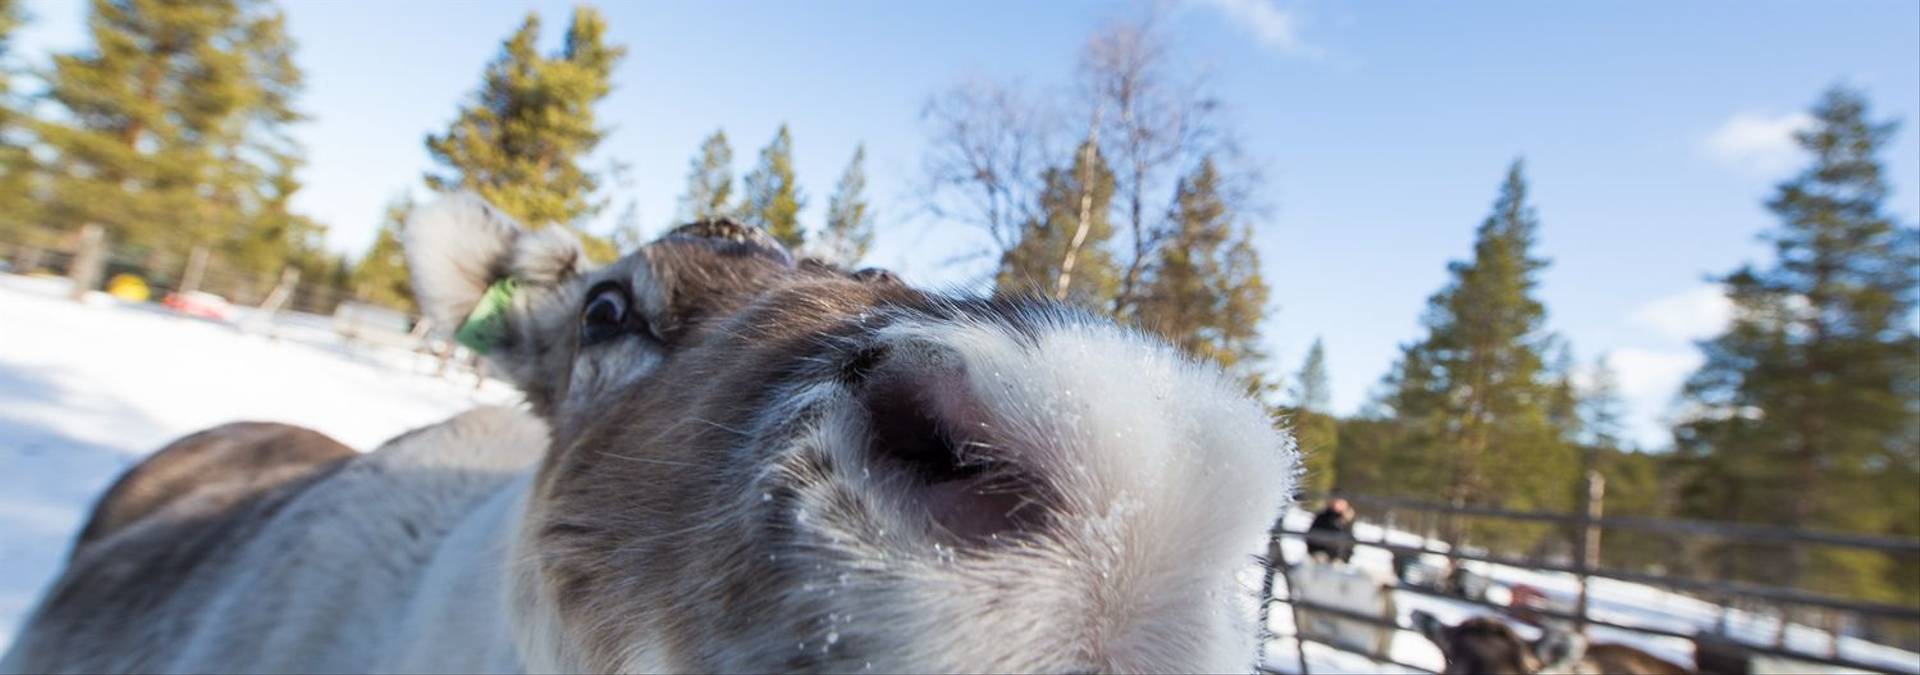 Reindeer Credit Inari-Saariselkä Tourism